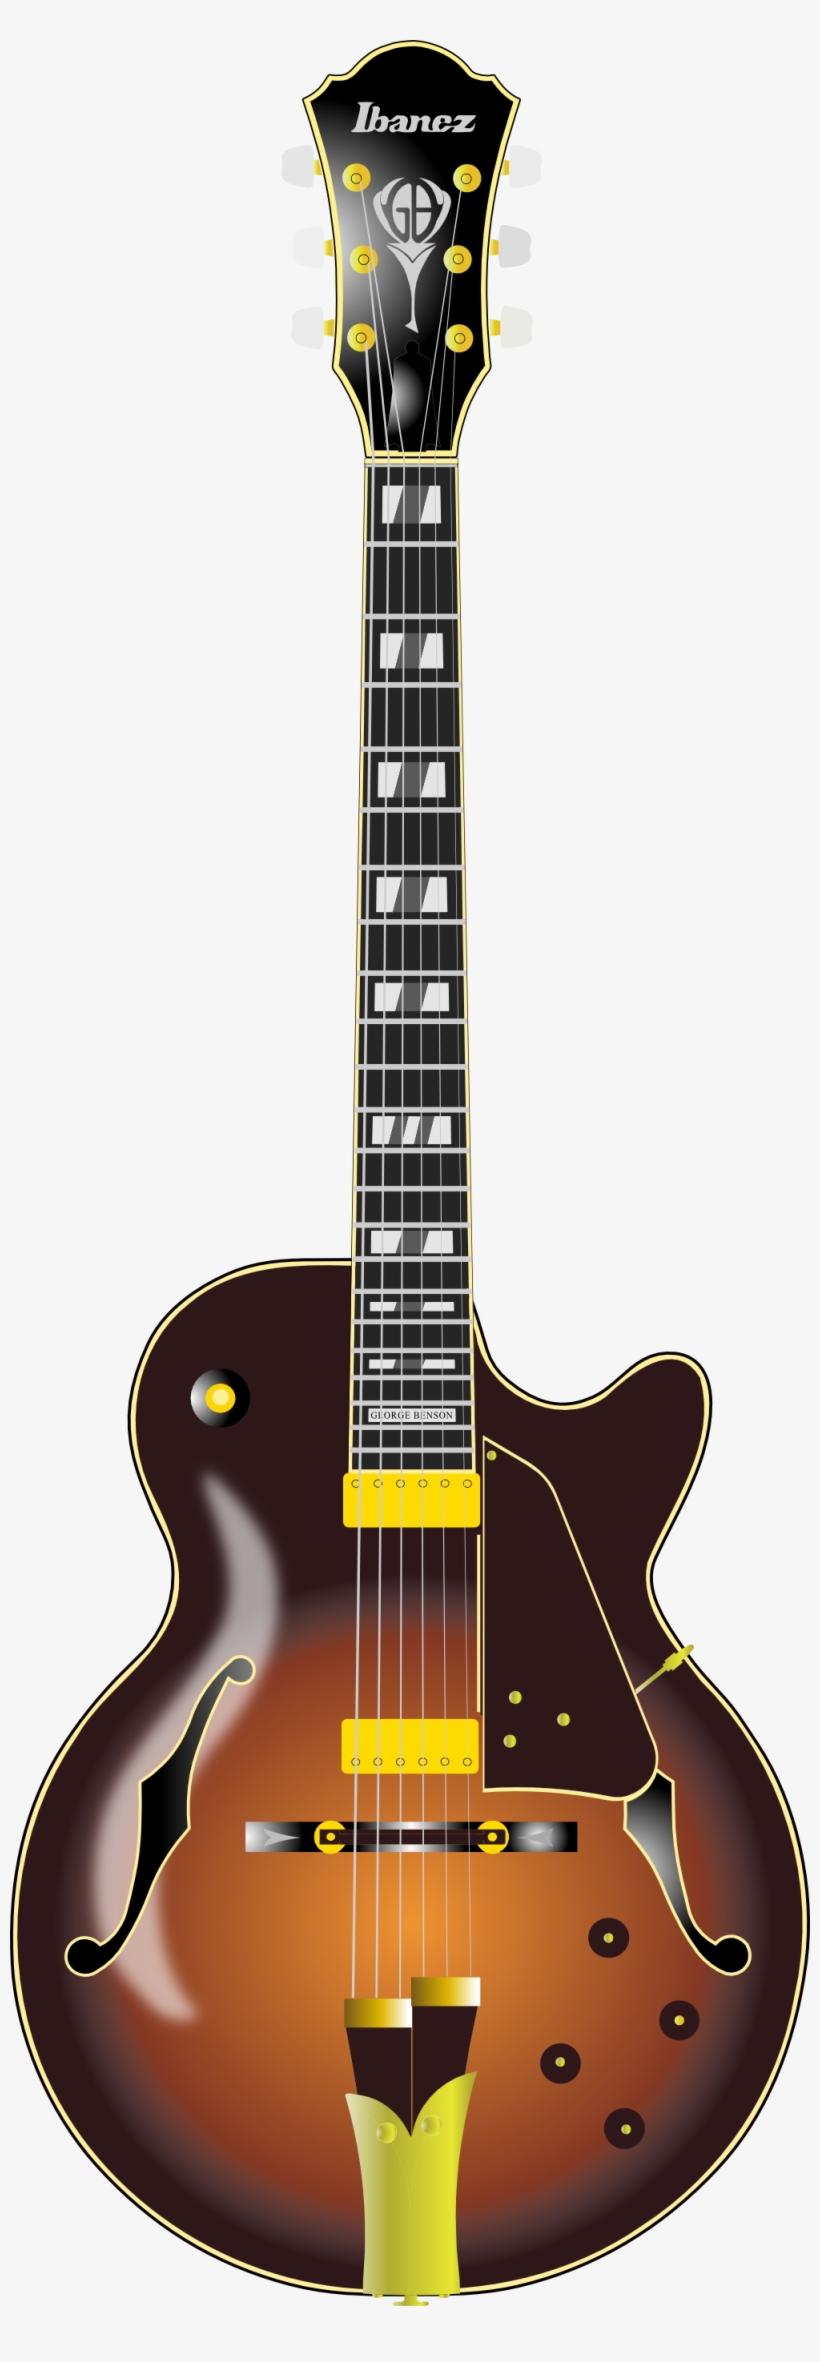 Ibanez Gb Brut Guitar 999px 483 - Ibanez Jsm10-vys John Scofield, transparent png #1643705